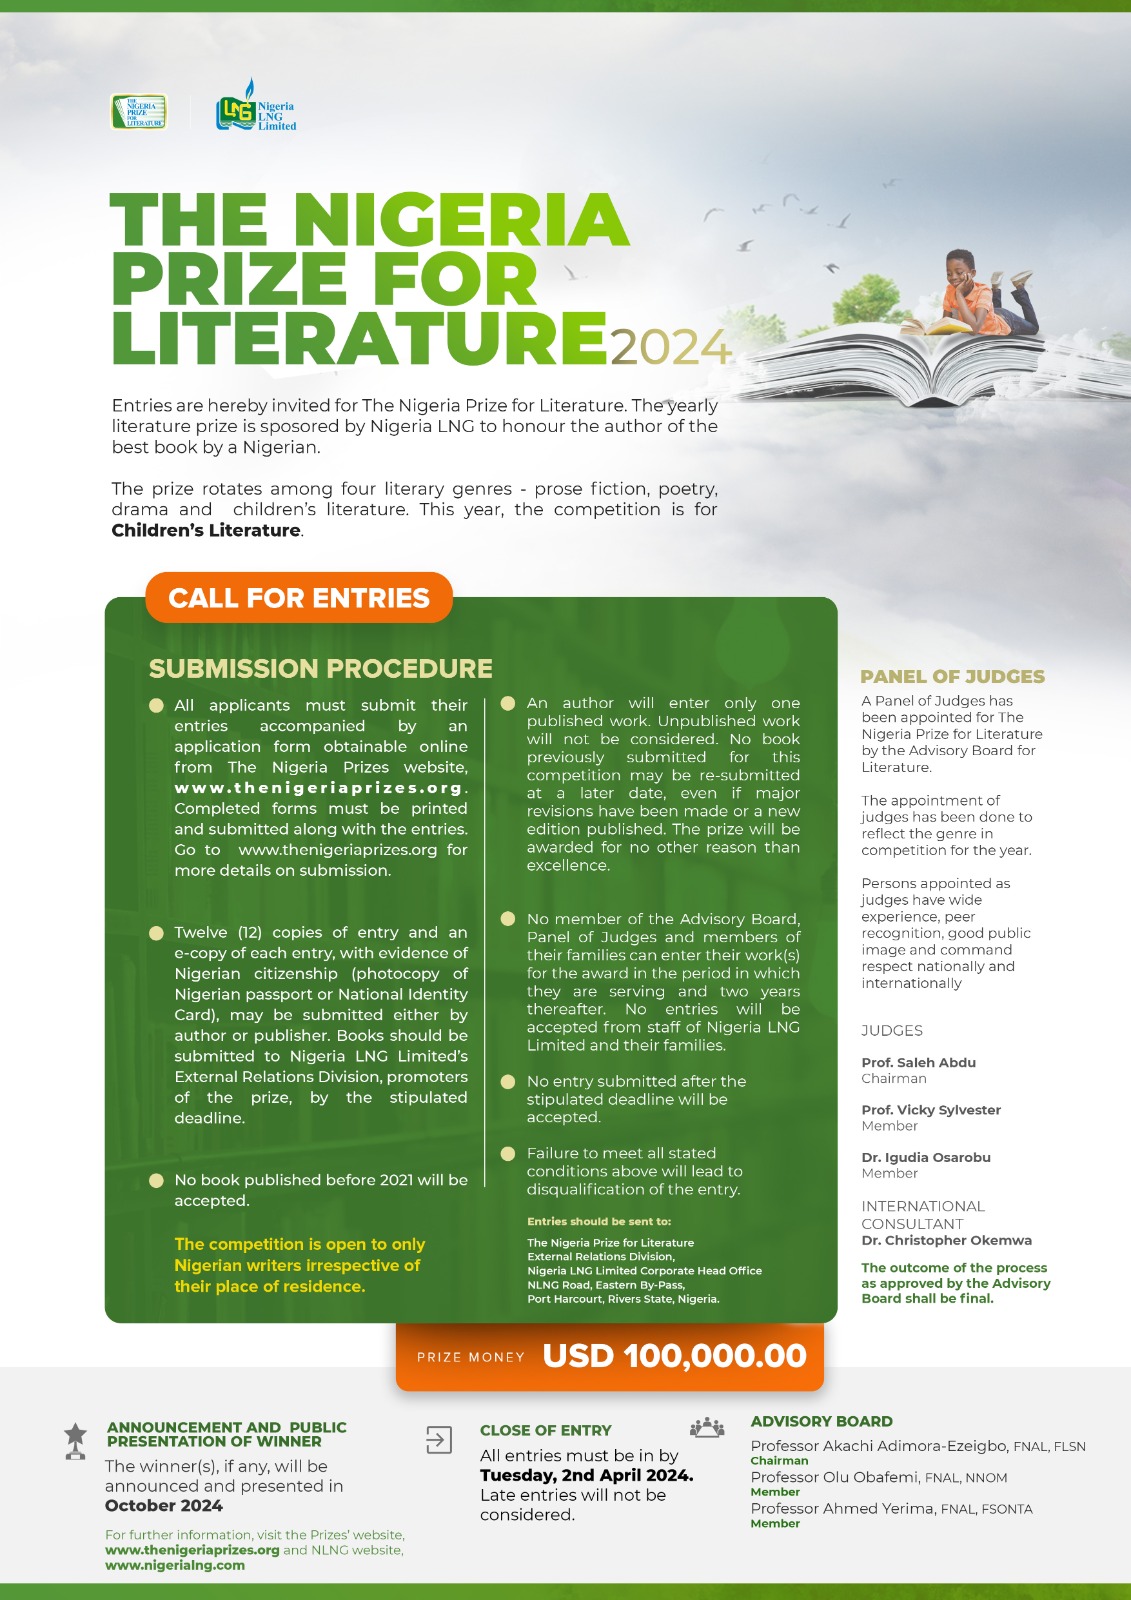 The Nigeria prizes 2024 address climate change, children’s literature